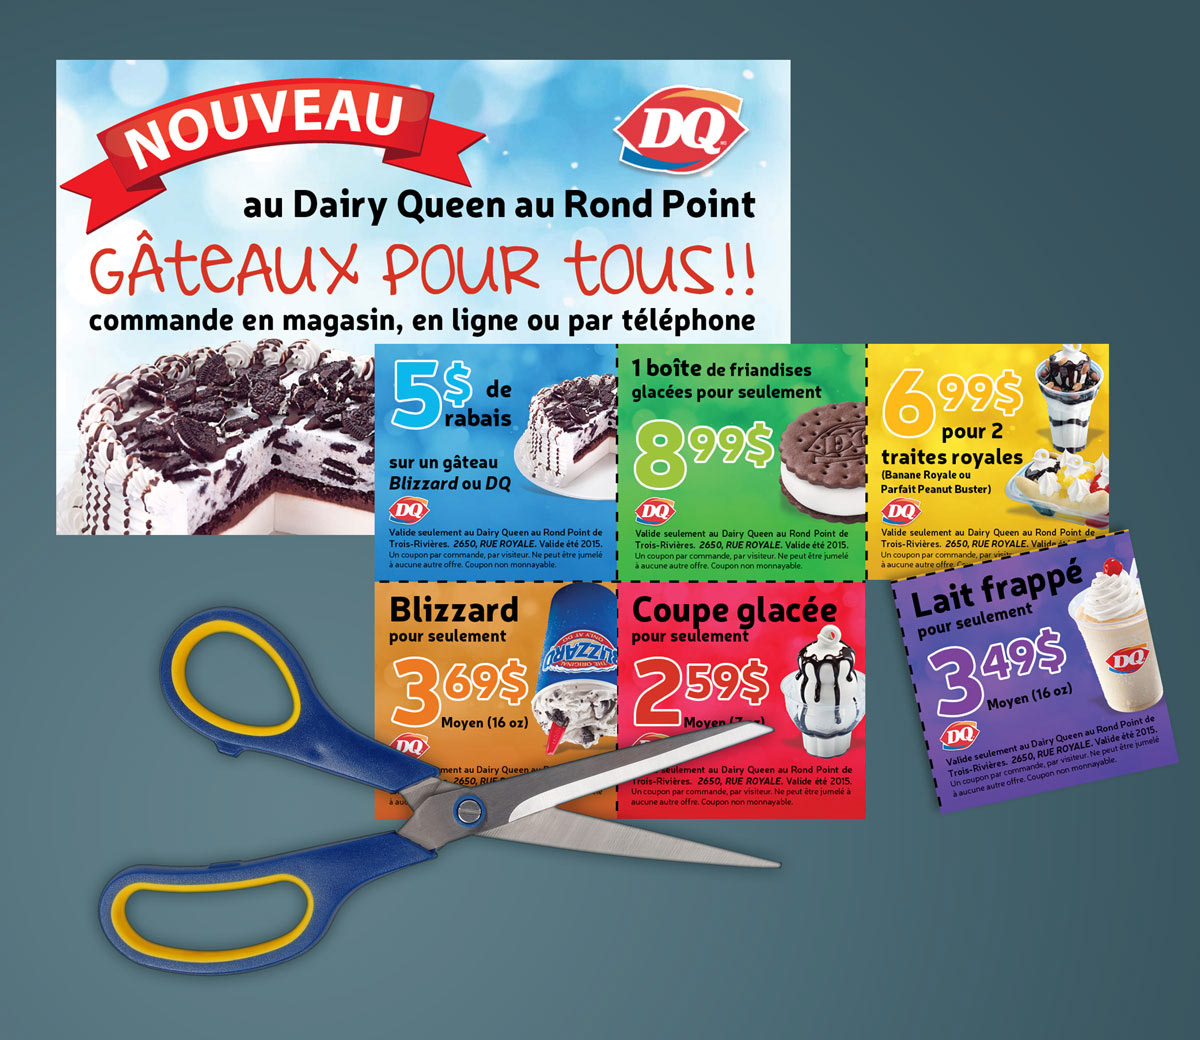 Dairy Queen Website trois-rivières Coupons order form